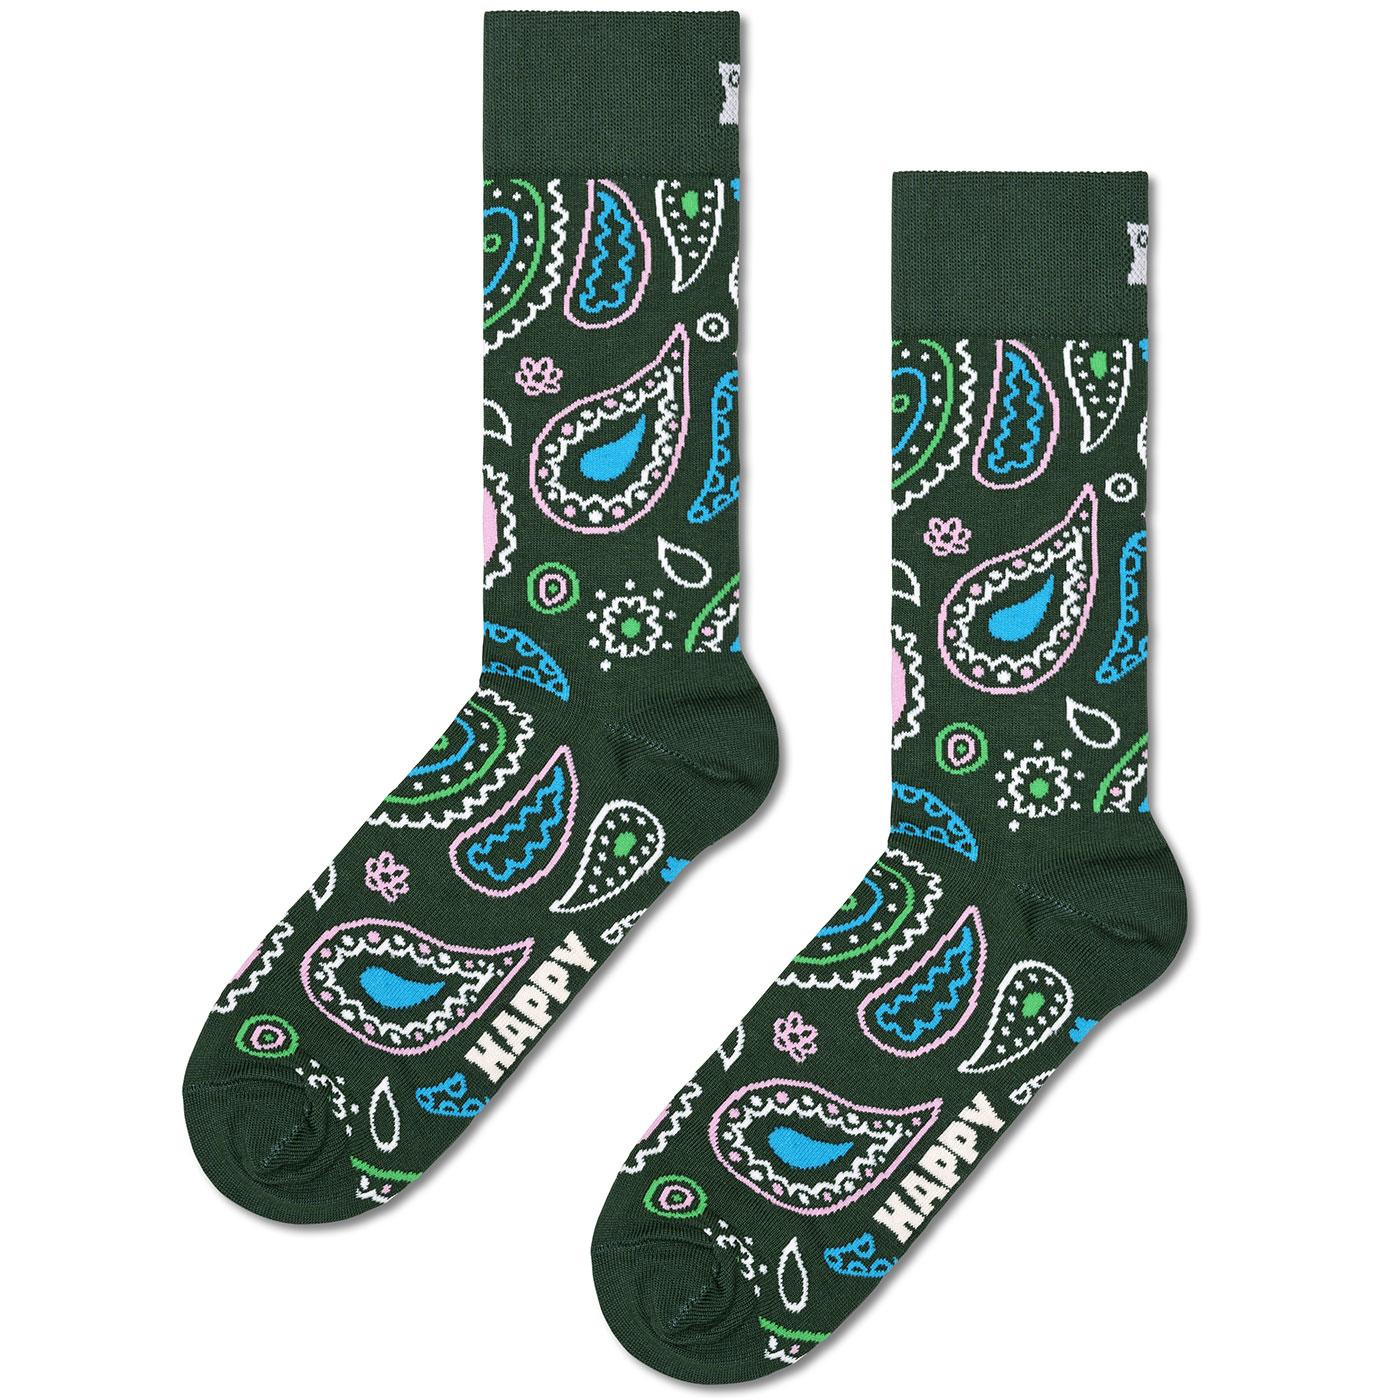 +HAPPY SOCKS Retro Paisley Pattern Socks in Green 